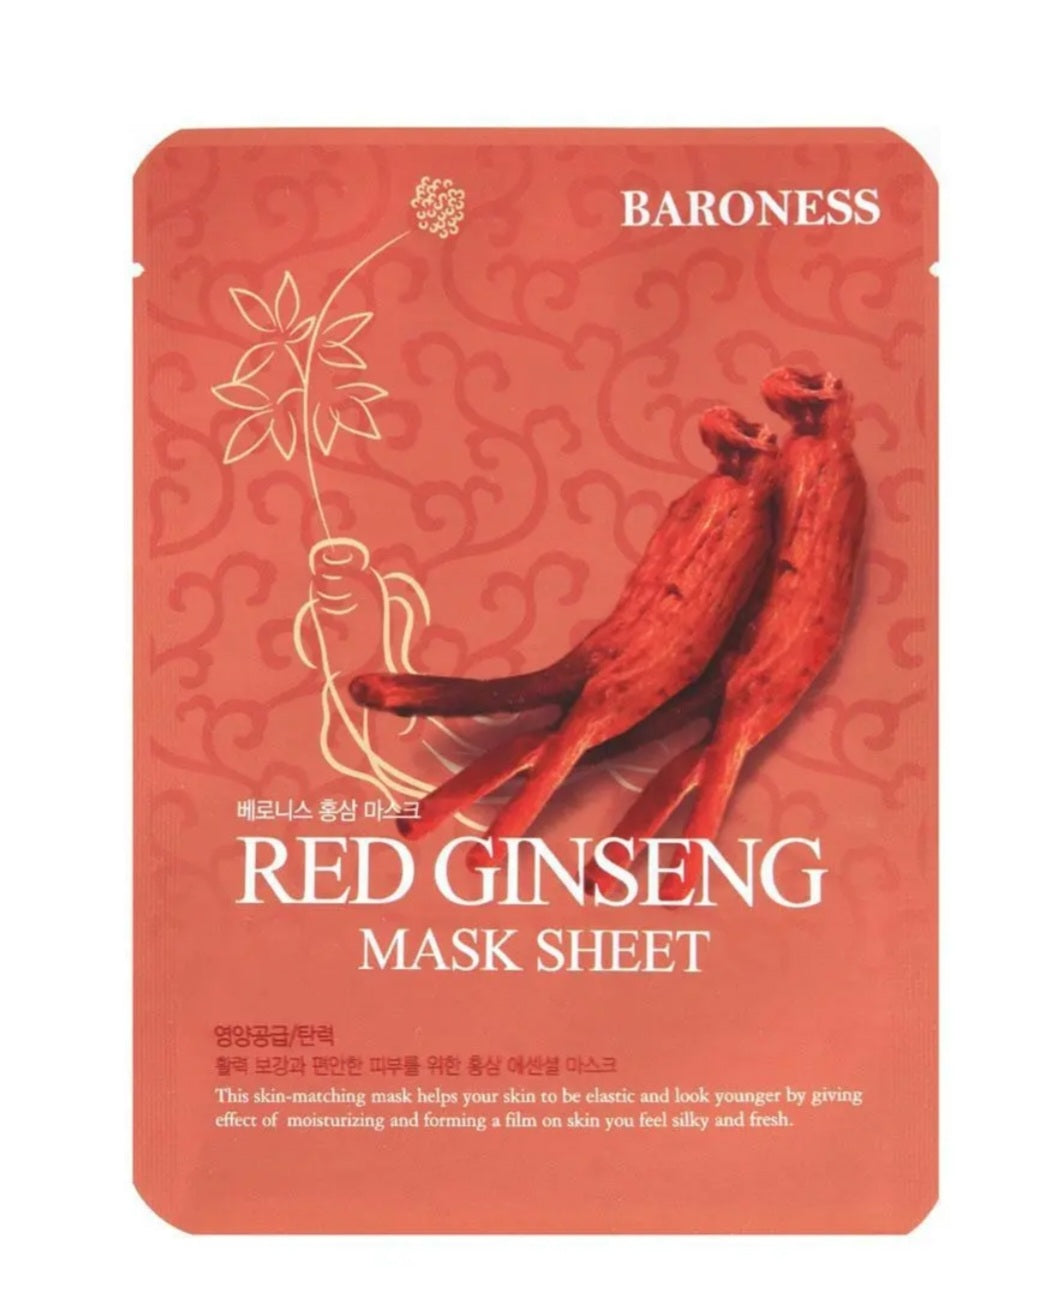 Red Ginseng Face Mask Sheet 3 Pack